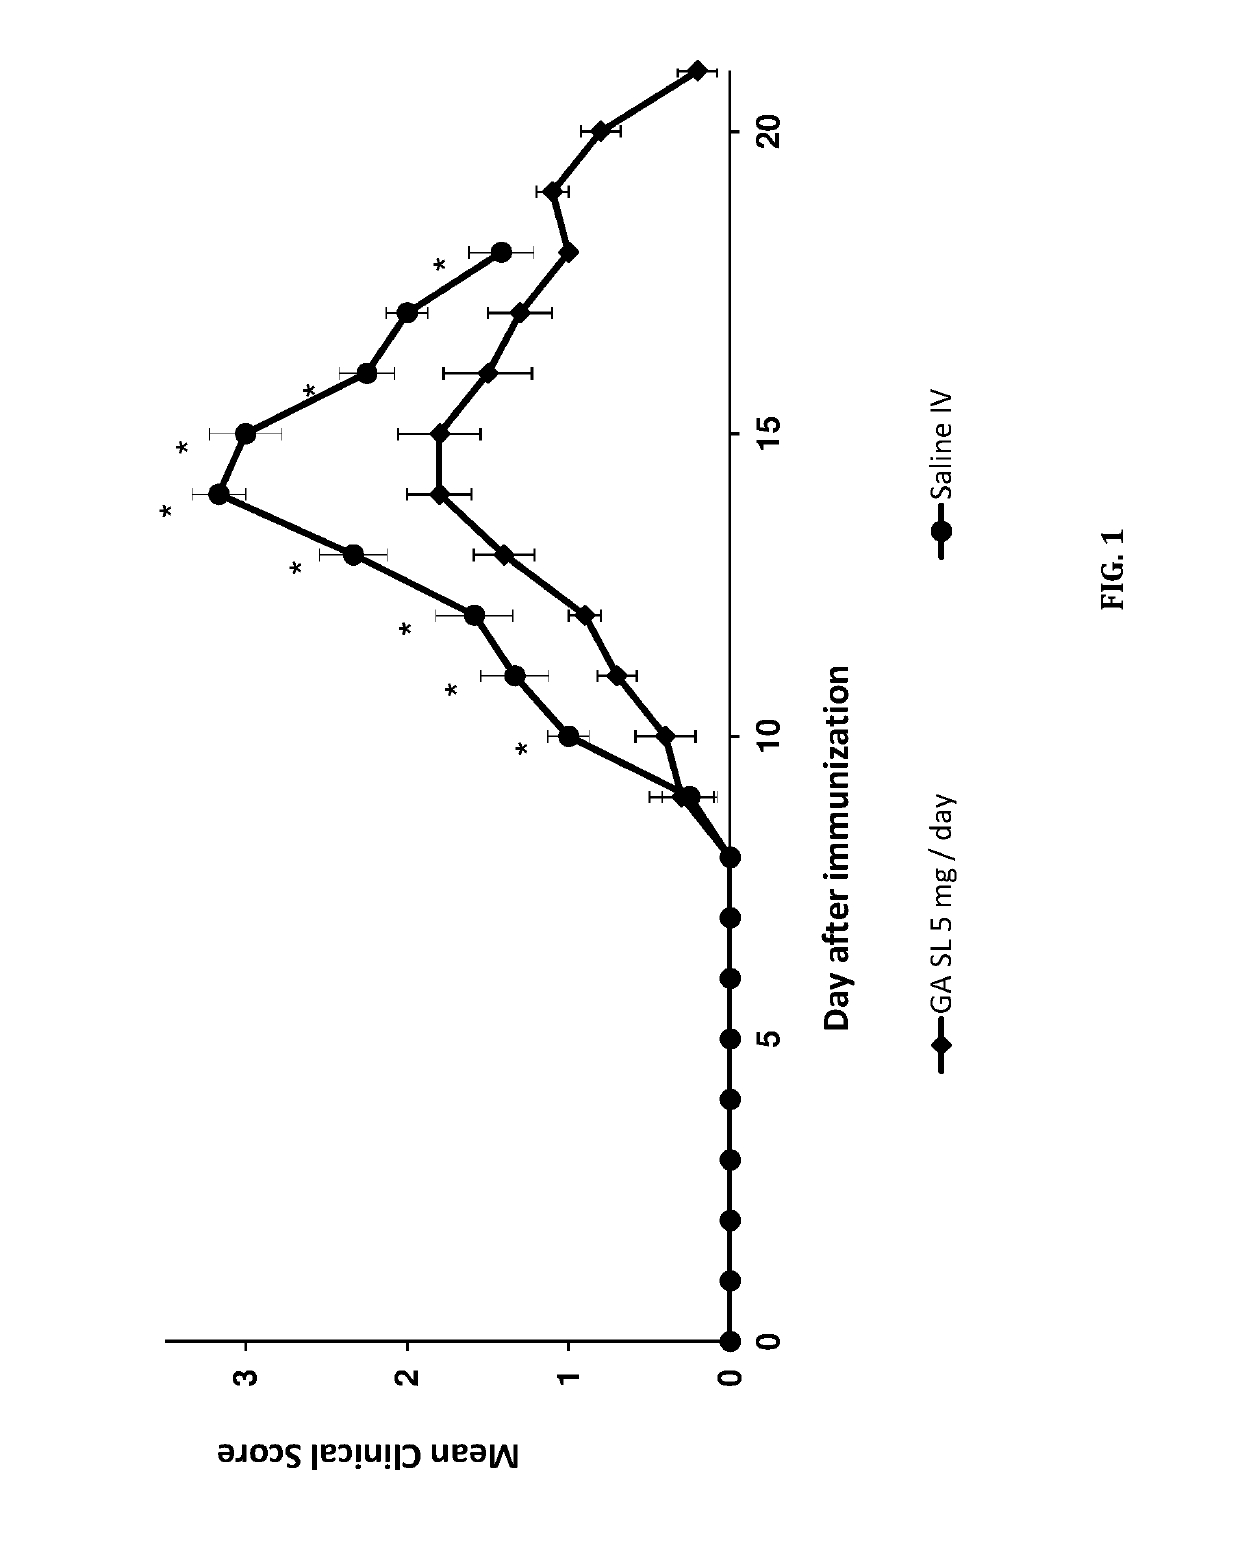 Sublingual delivery of glatiramer acetate